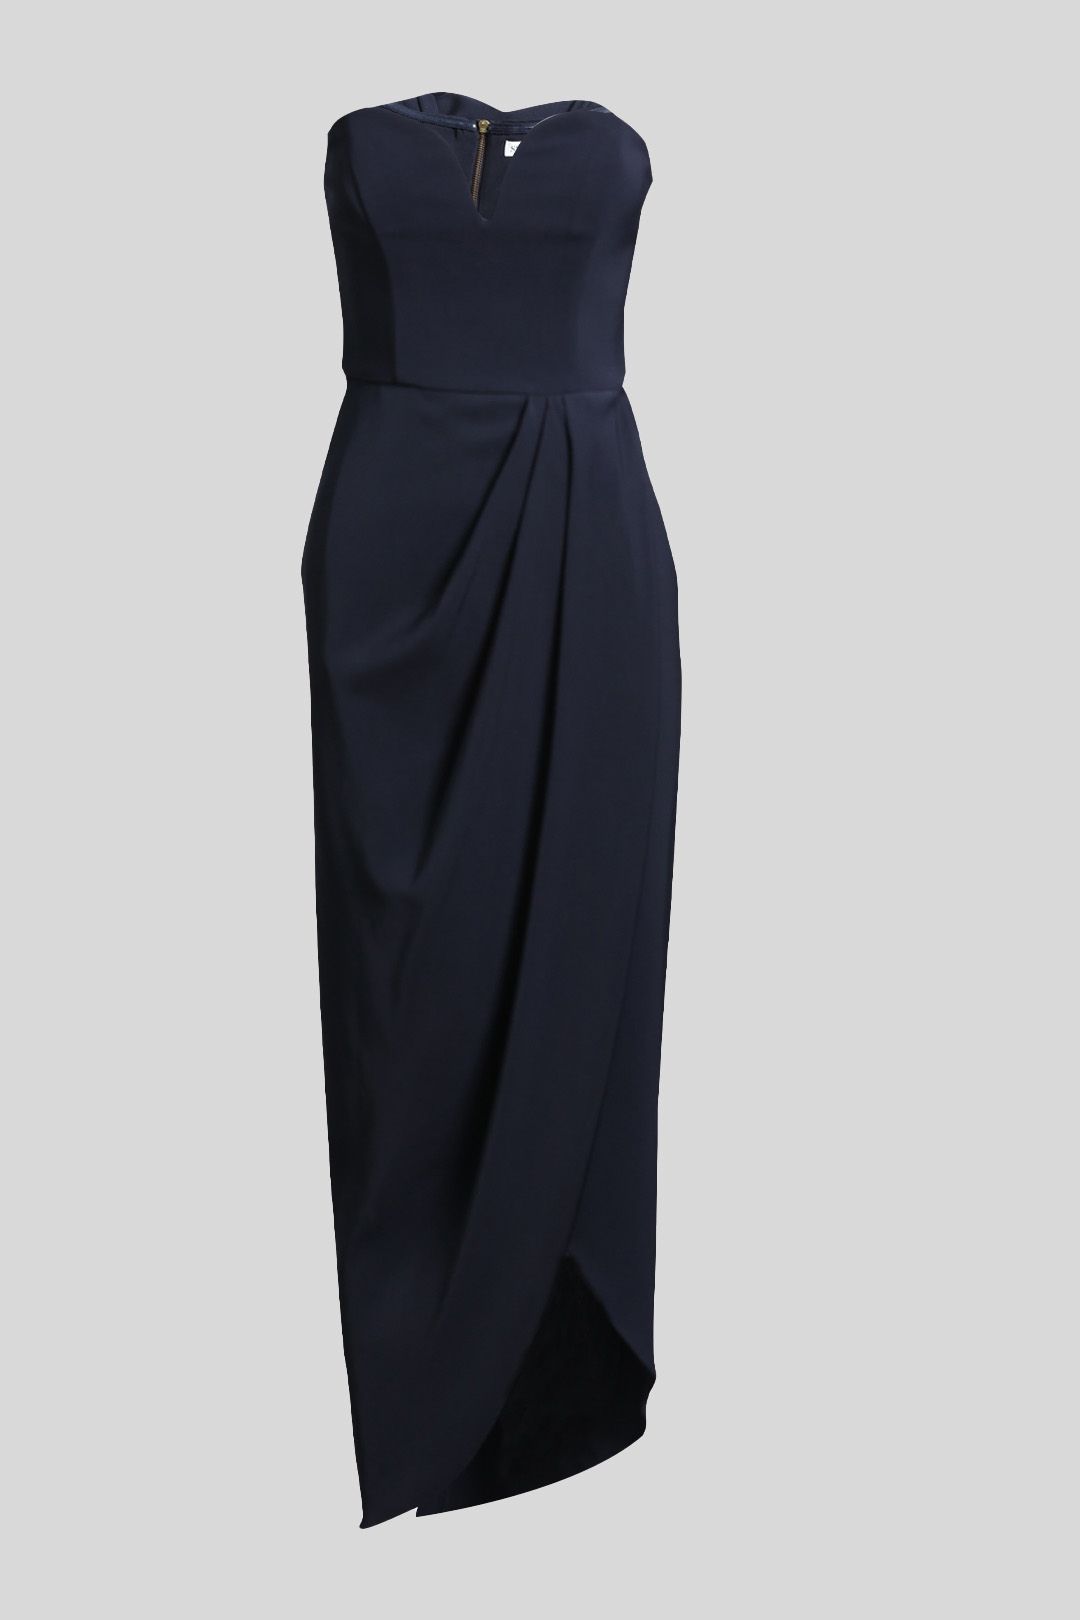 Shona Joy - Navy Core ‘U’ Bustier Draped Dress